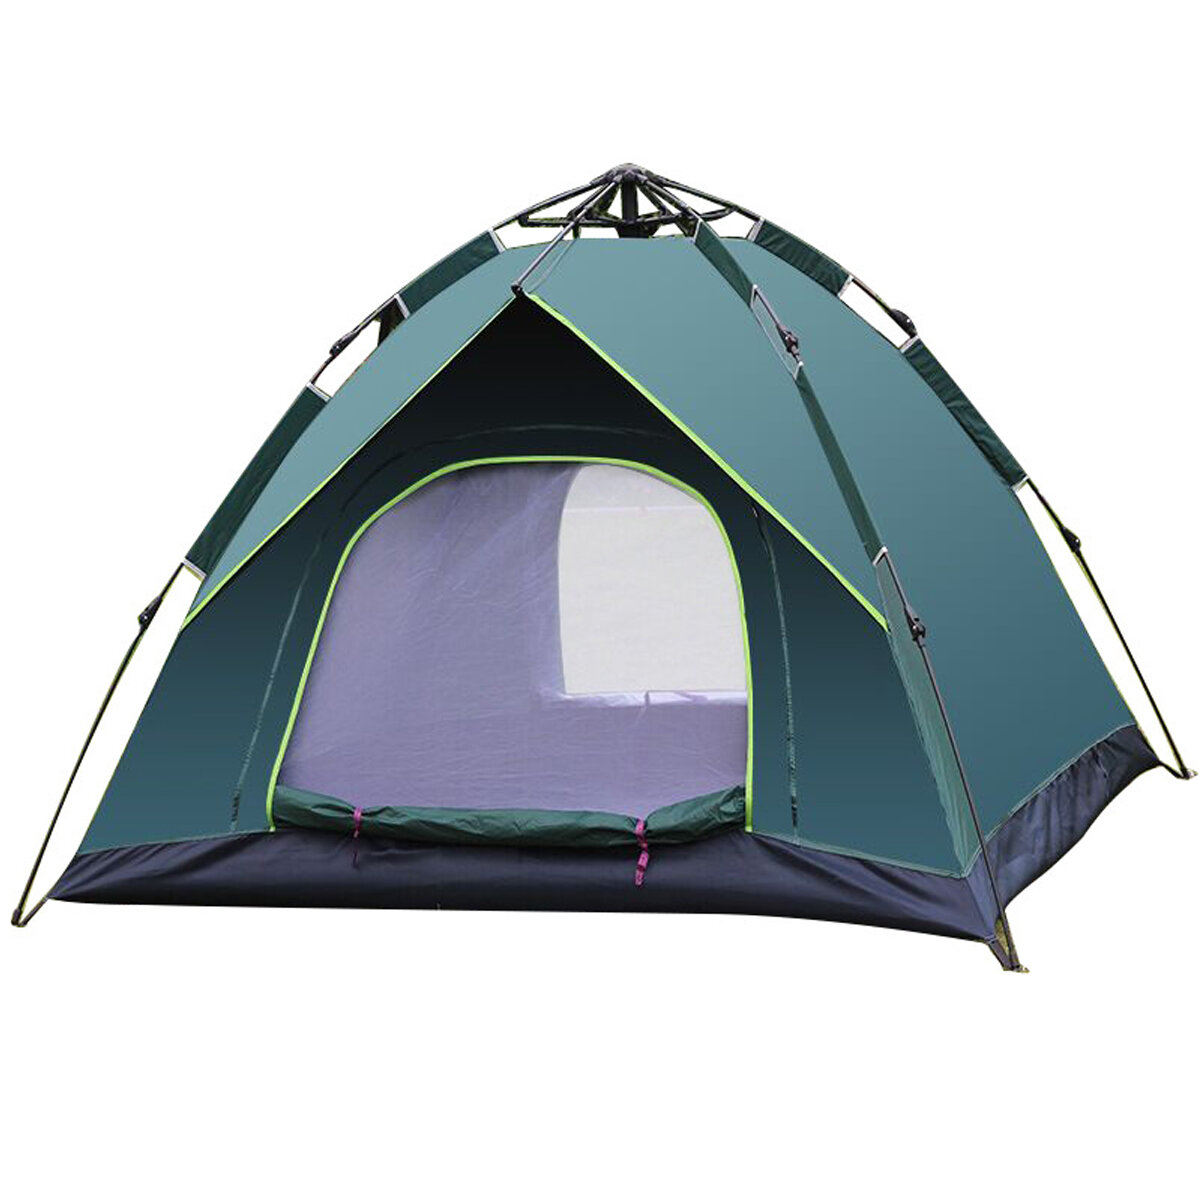 IPRee® 3-4 People Αδιάβροχη σκηνή κάμπινγκ 210T PU Υφασμα UV Protectionof Tent για πεζοπορία σε εξωτερικούς χώρους